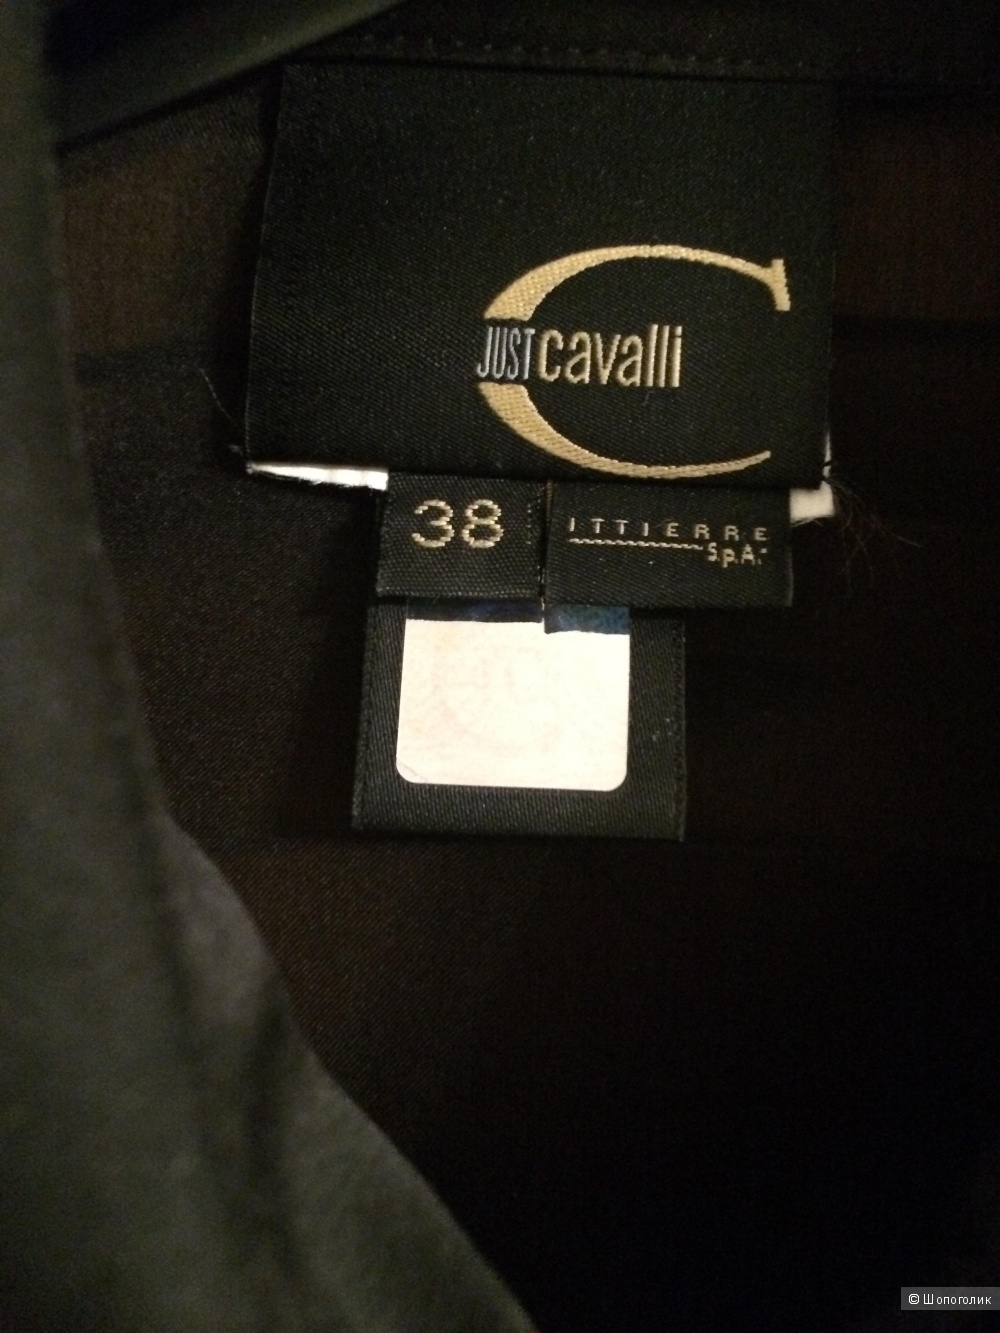 Новая блузка-рубашка Just Cavalli, 38 it, шёлк